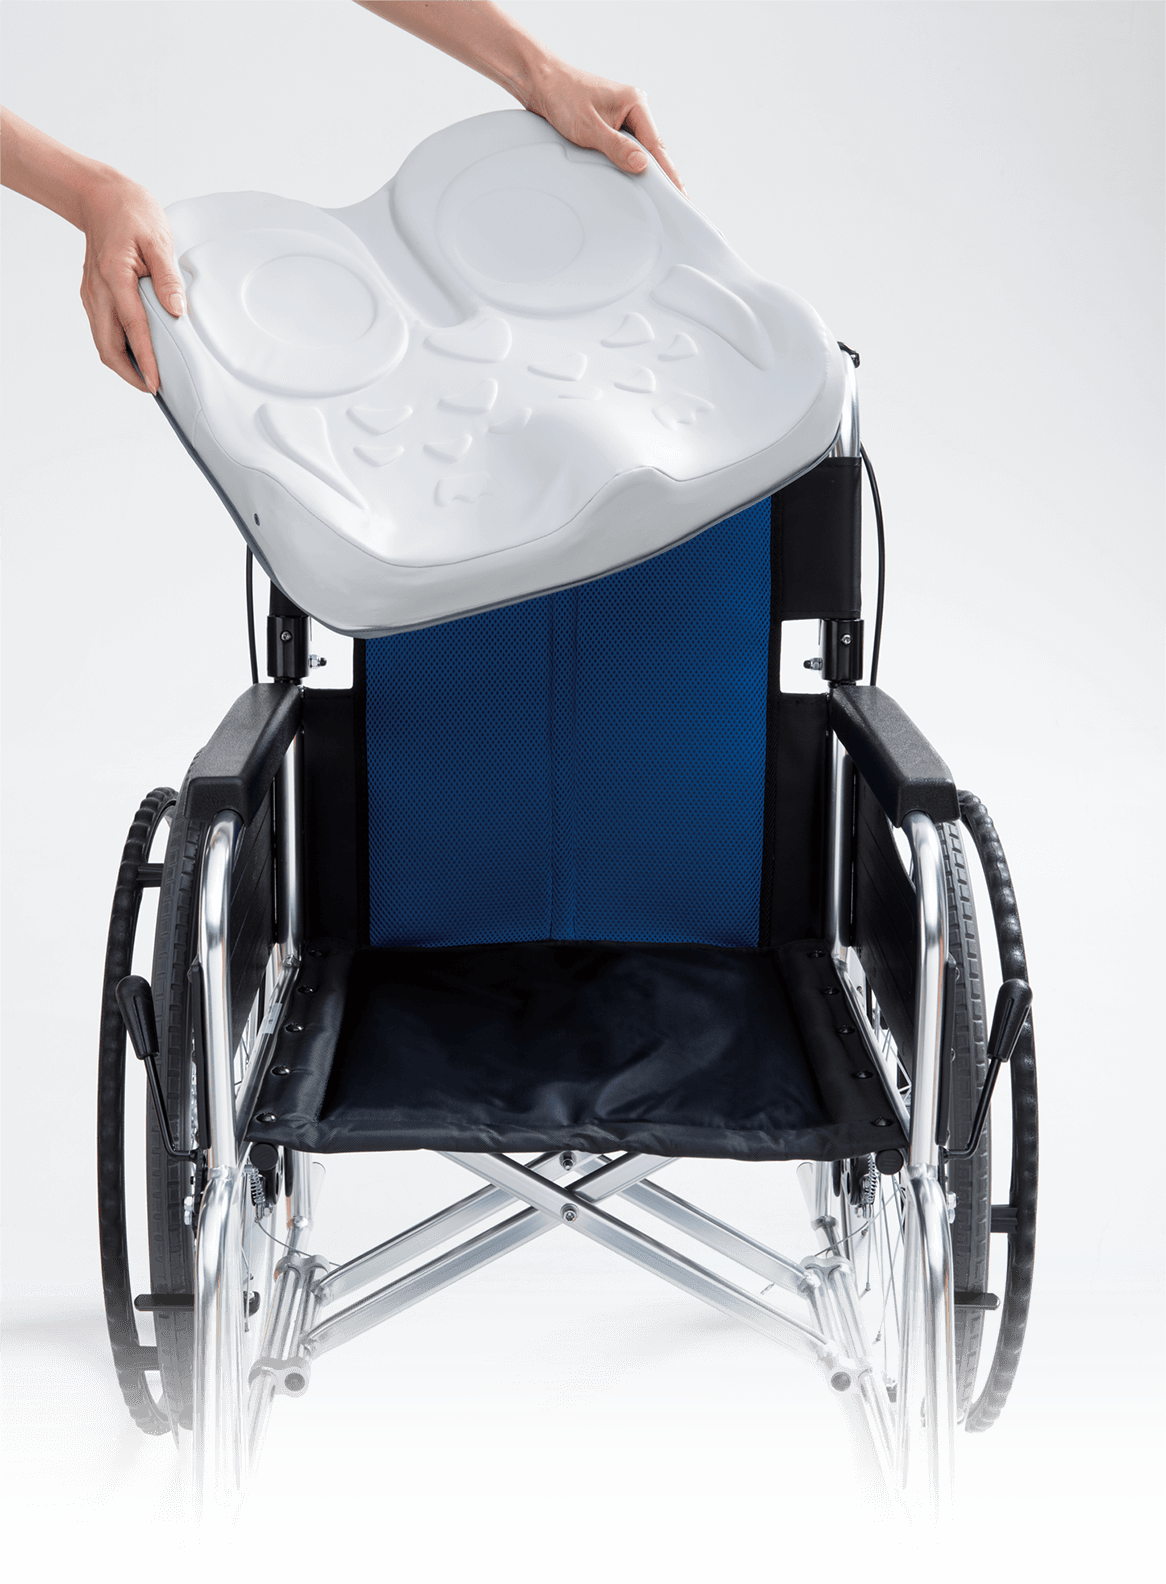 EXGEL特級舒適坐墊系列貓頭鷹3D厚度輪椅座墊